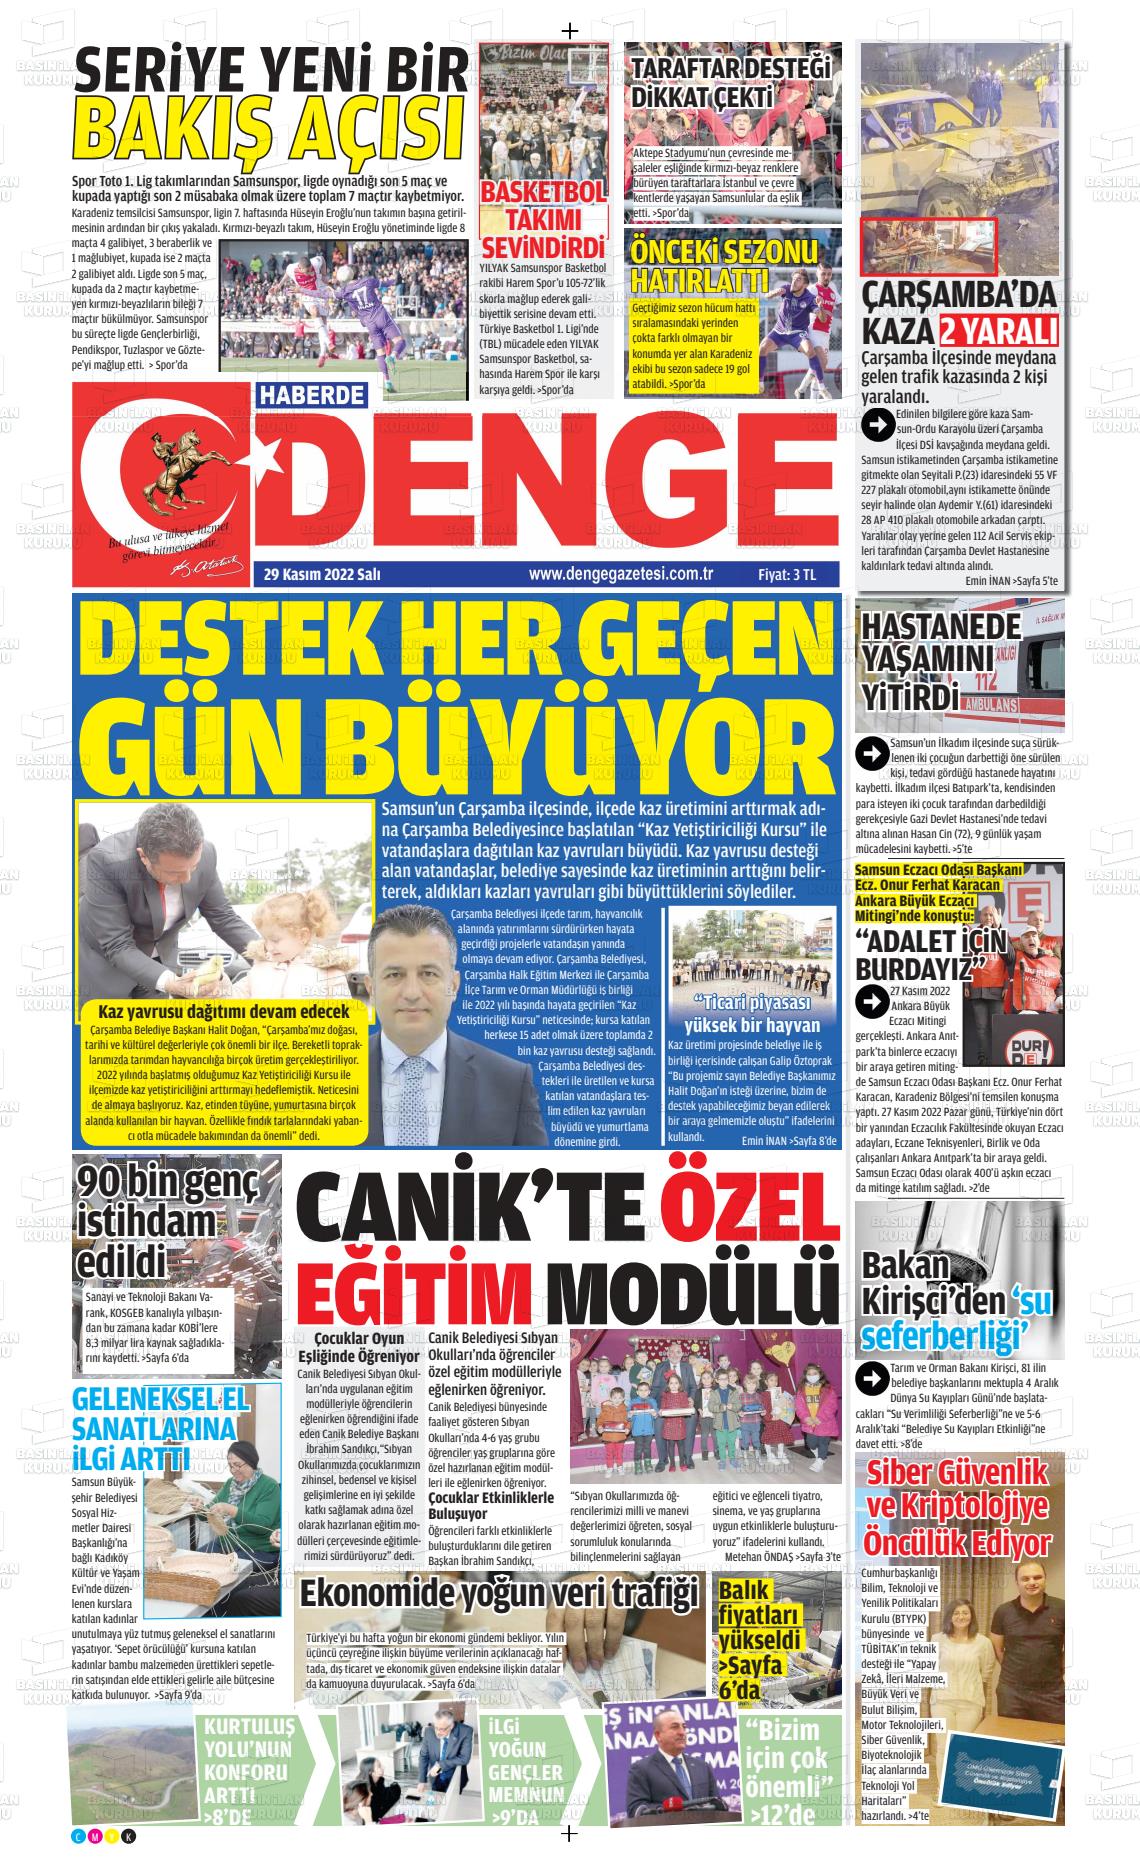 29 Kasım 2022 Samsun Denge Gazete Manşeti